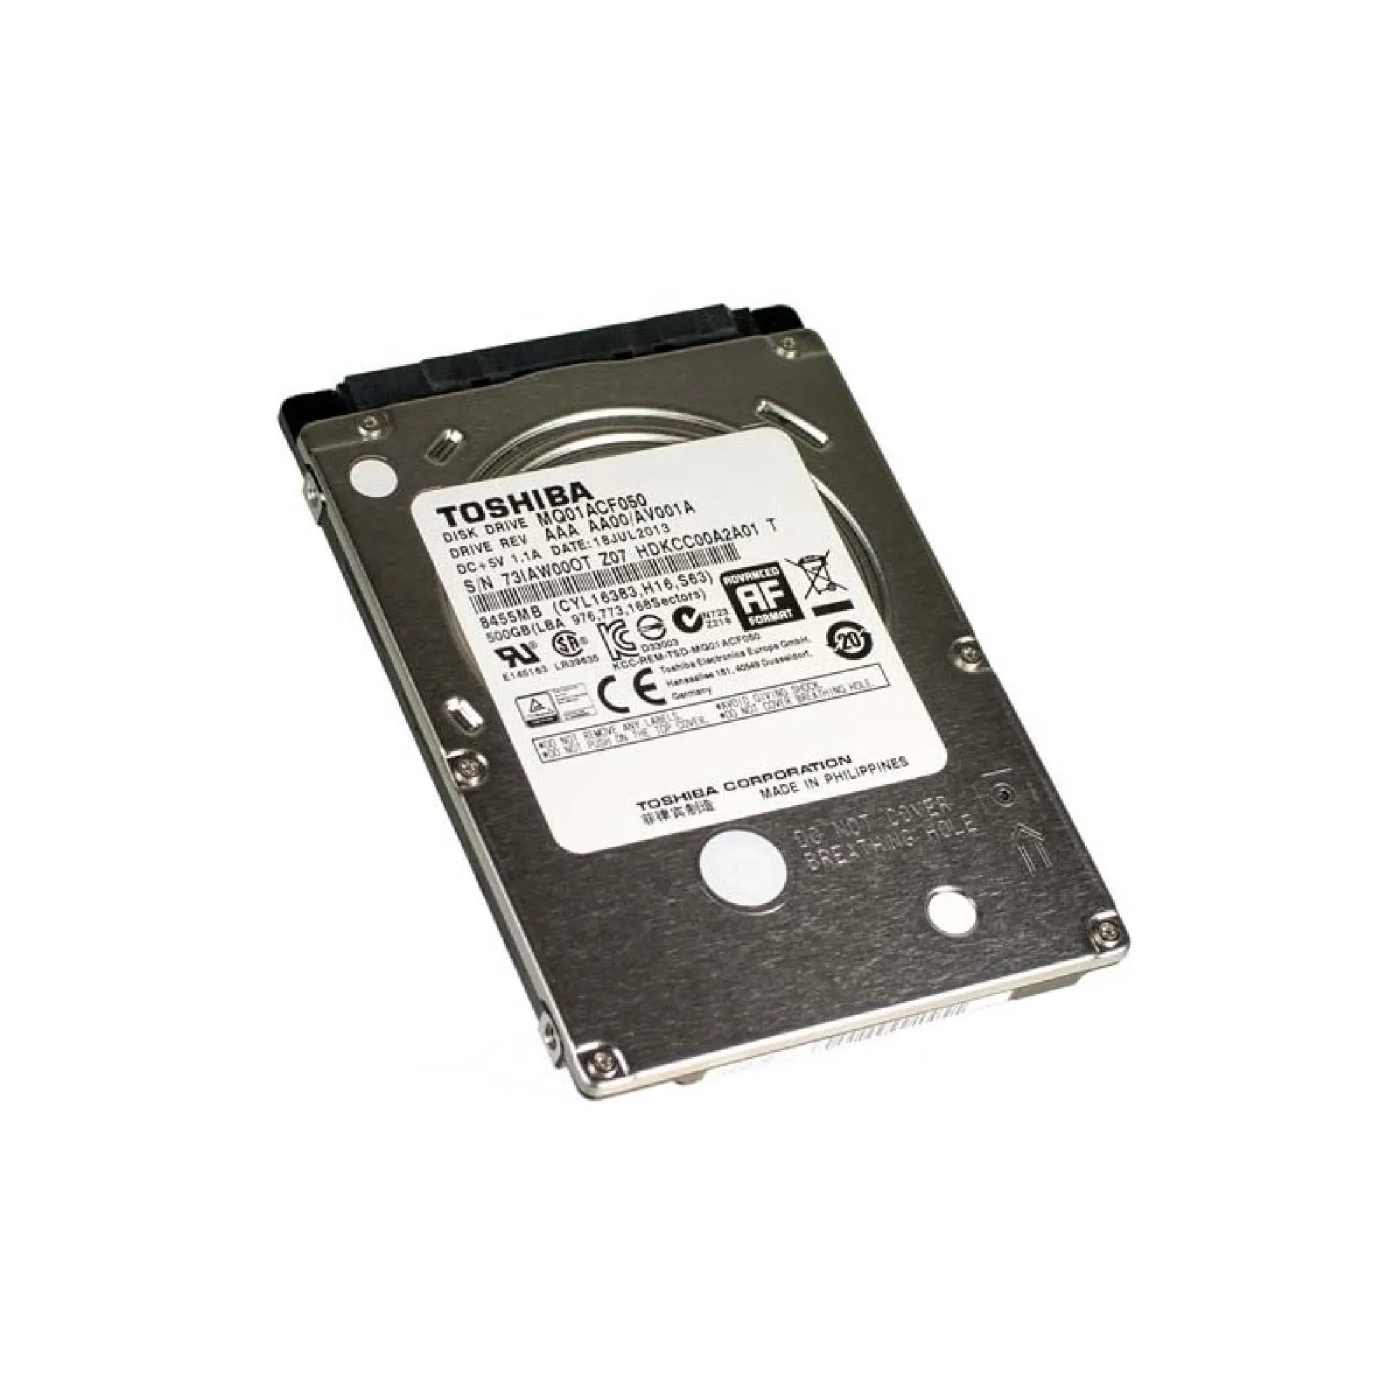 Купить Жесткий диск Toshiba 500GB 5400rpm 8MB 2.5" SATAIII (MQ01ACF050_) - фото 2